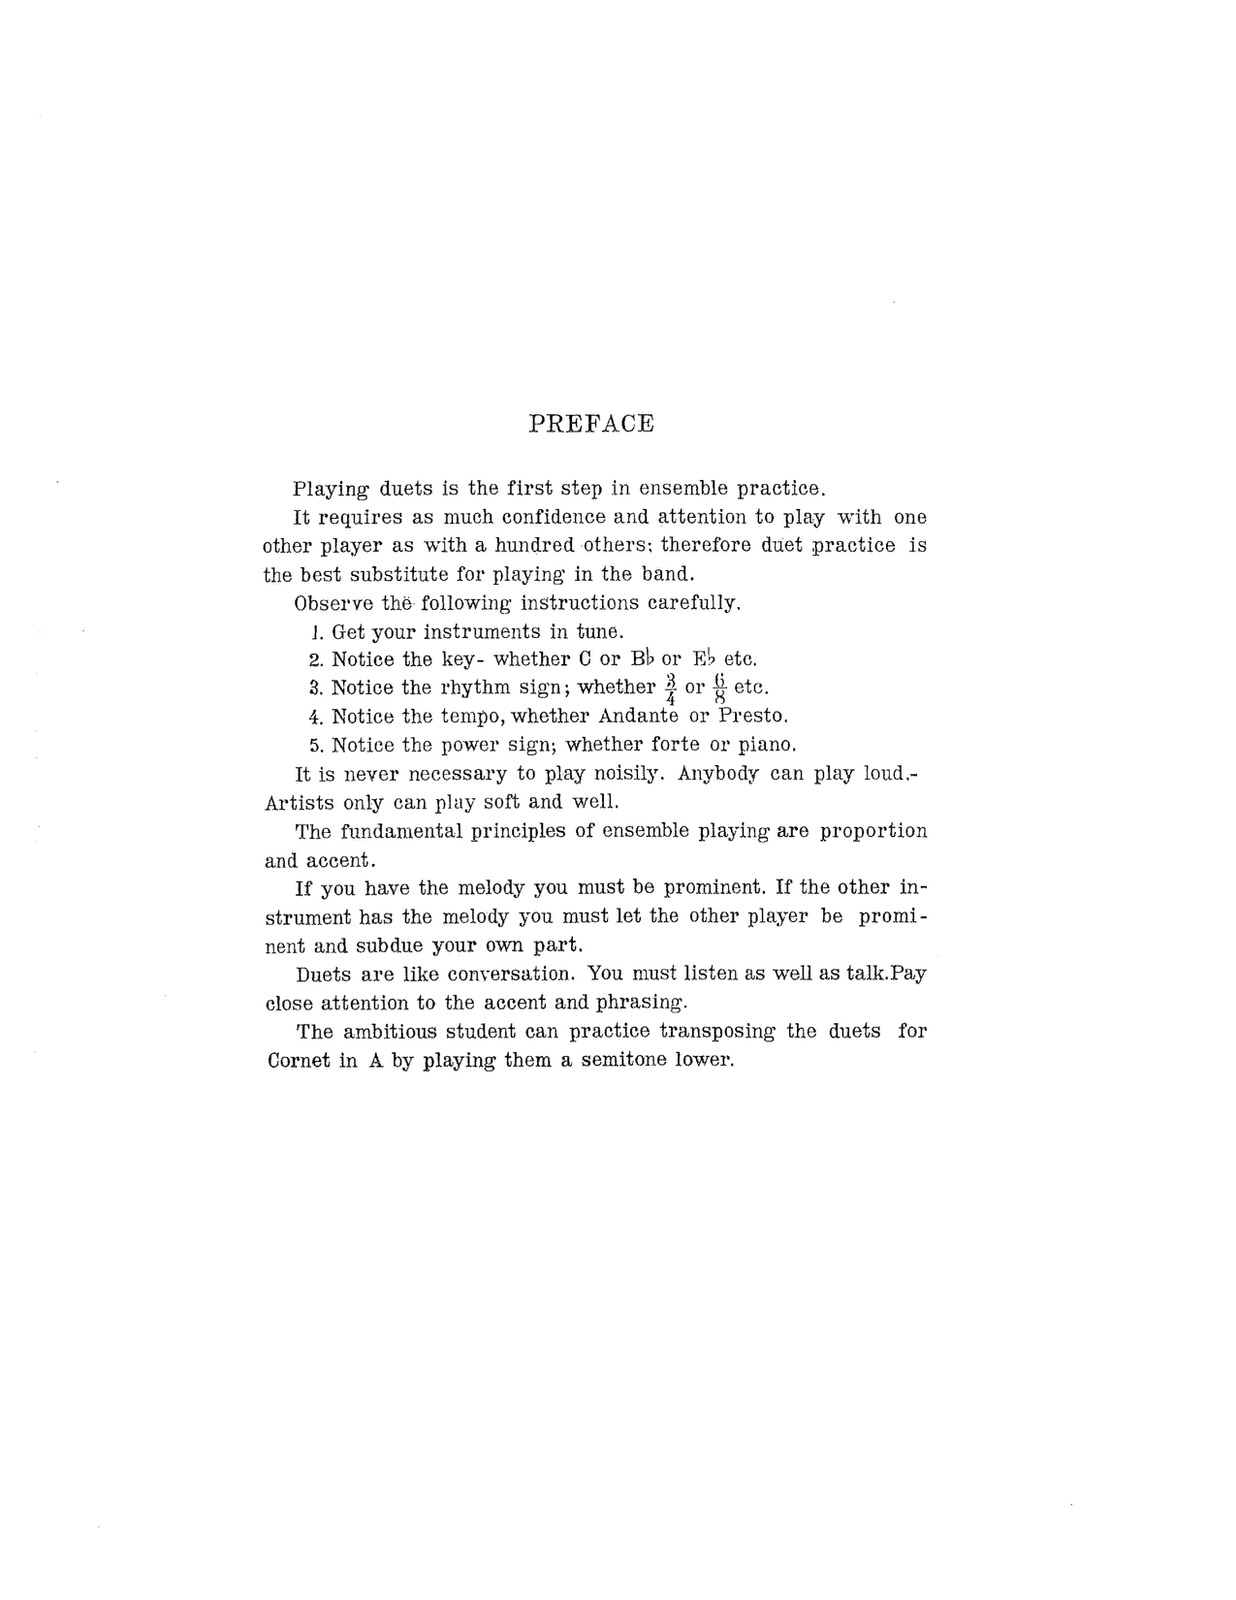 20 Duets for Cornets by Shuebruk, R. - qPress